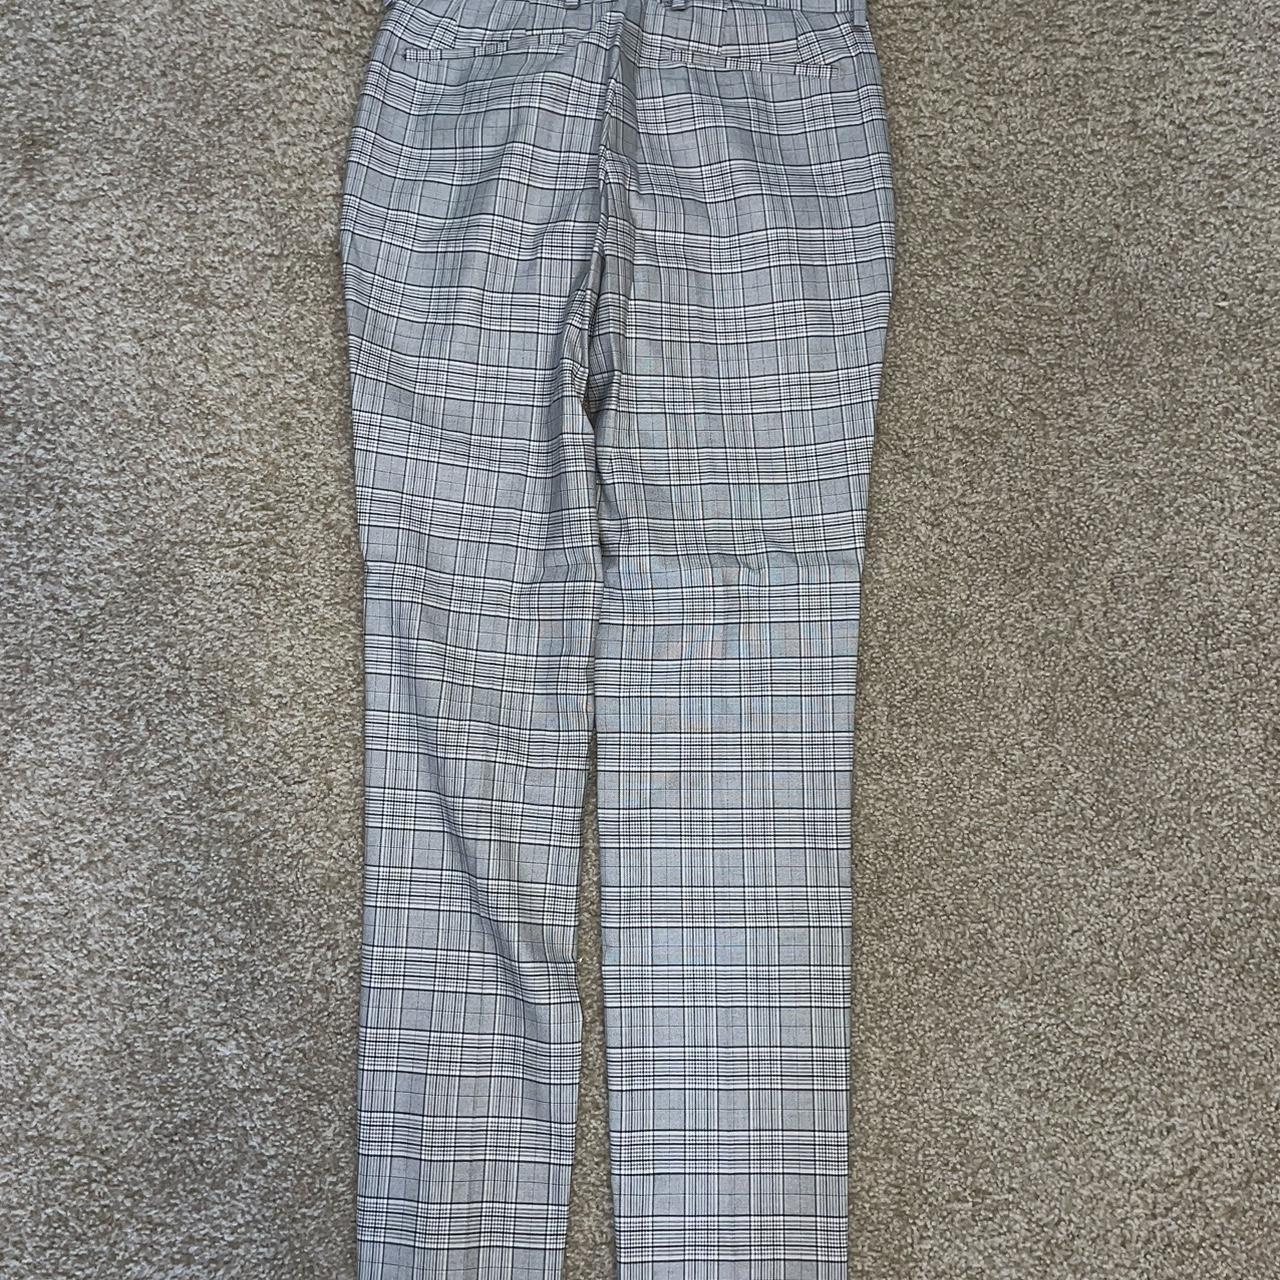 NWT $120 Topman Topshop Men grey blue Stretch Cotton Chinos Pants 34R 31  A75 | eBay